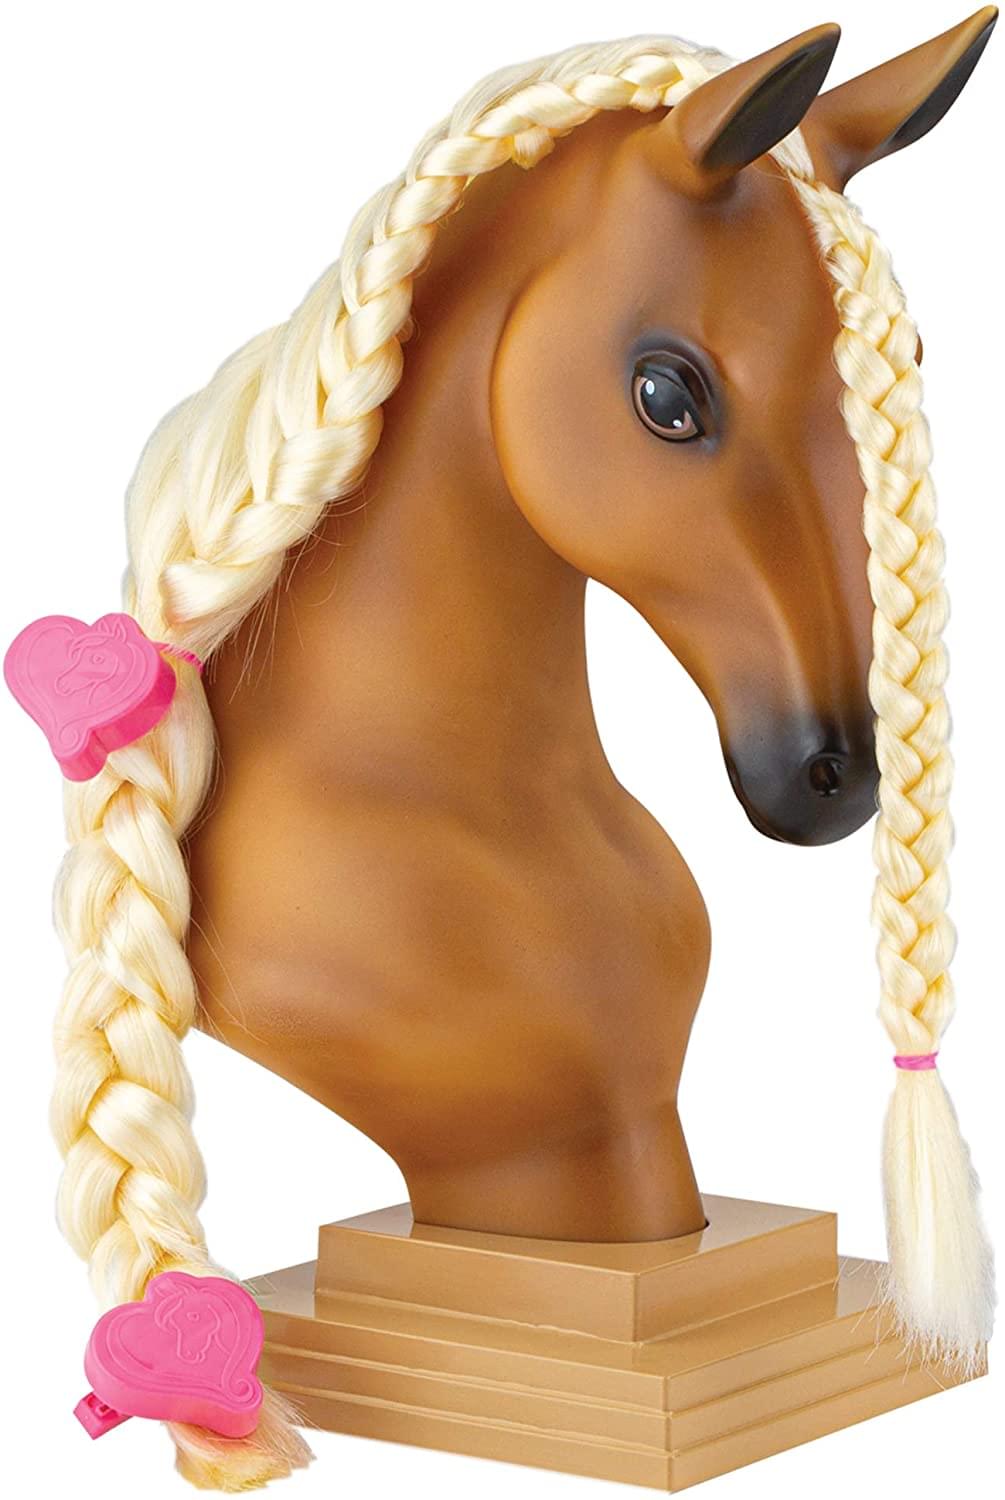 Breyer Horses Mane Beauty Styling Head | Sunset